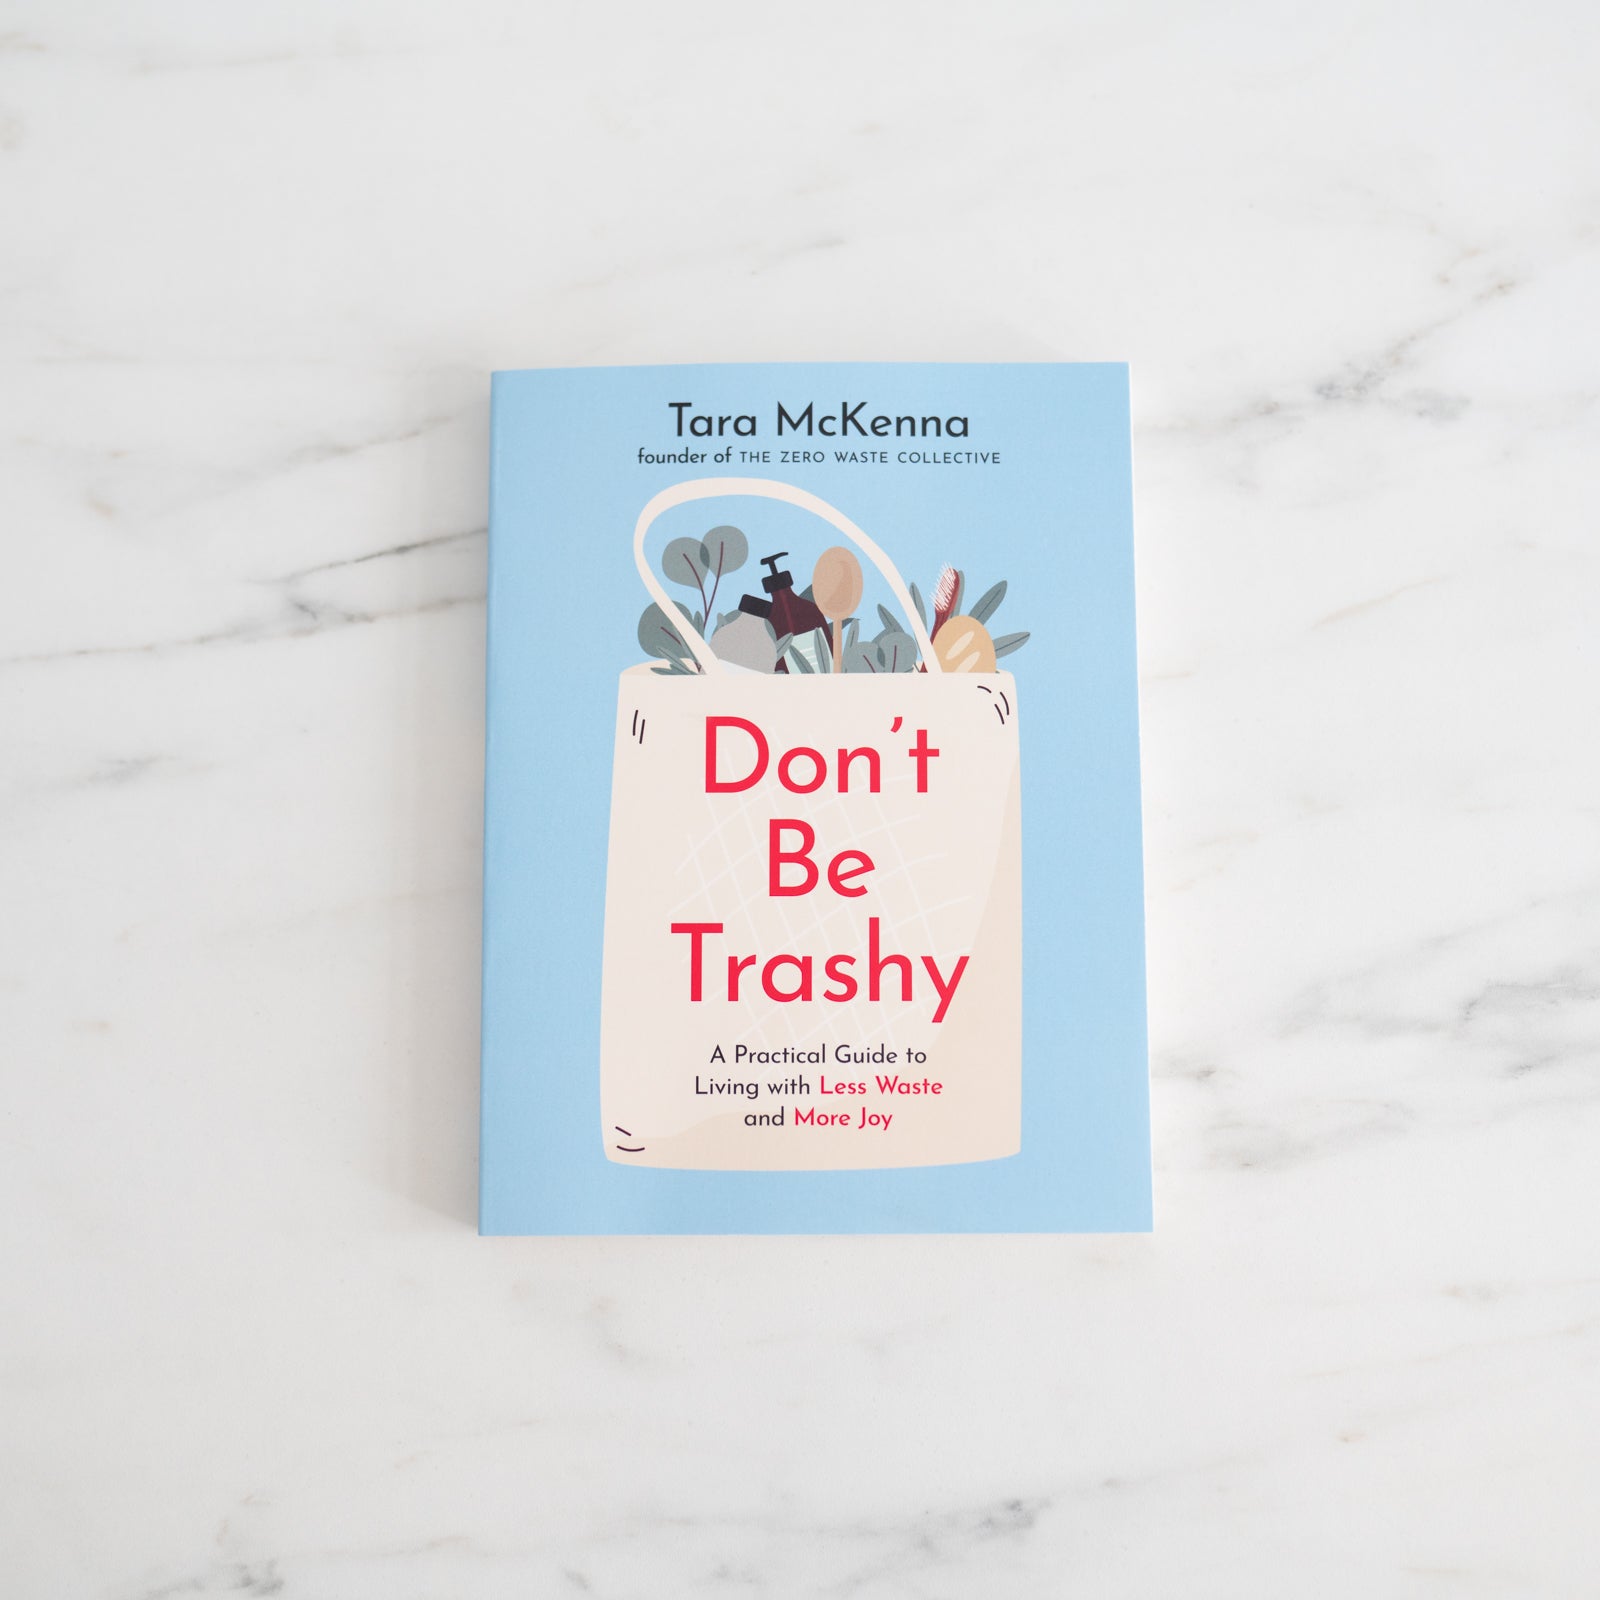 "Don't Be Trashy" by Tara McKenna